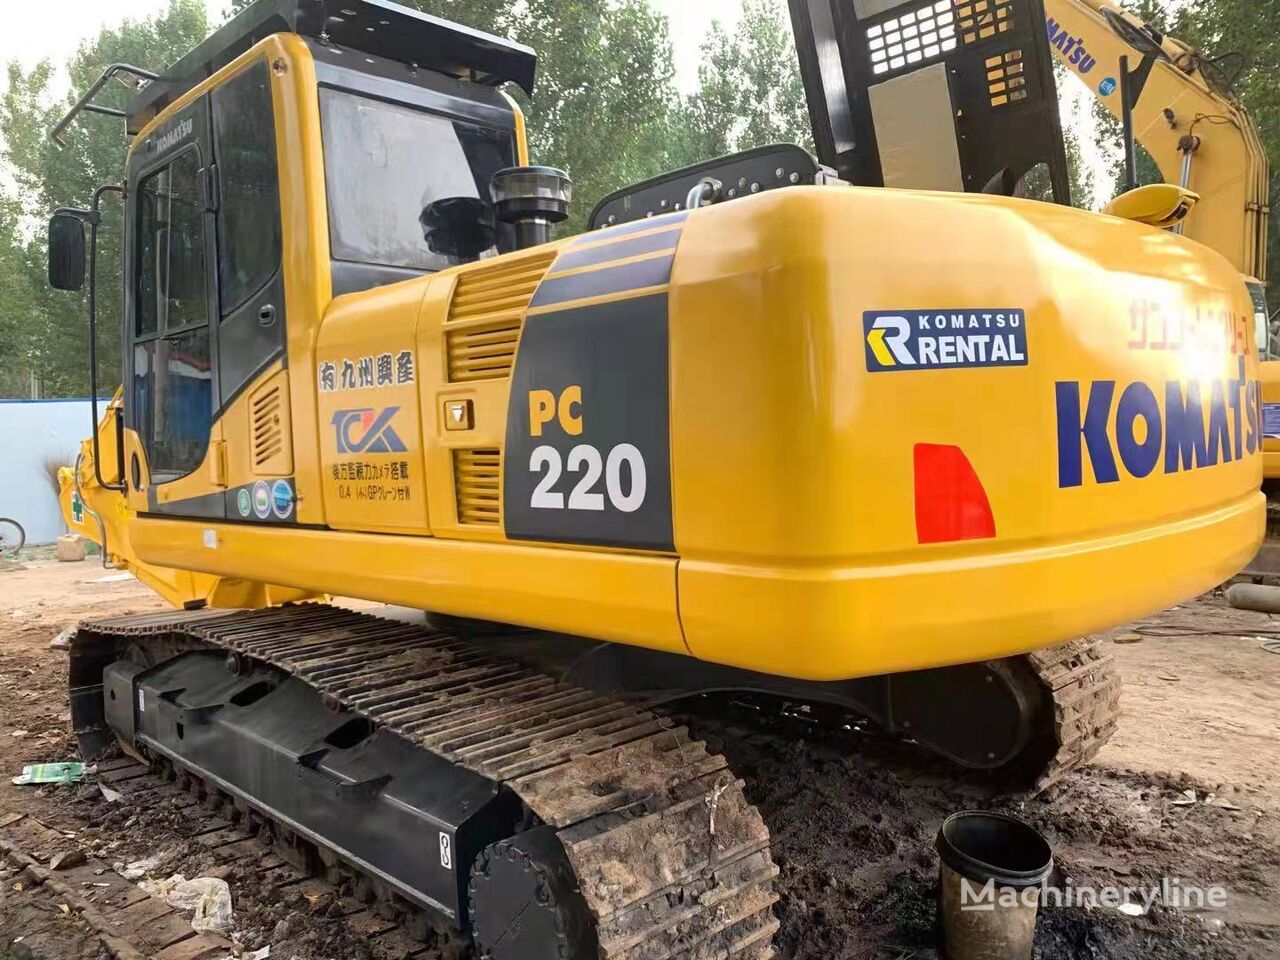 Komatsu PC220 tracked excavator